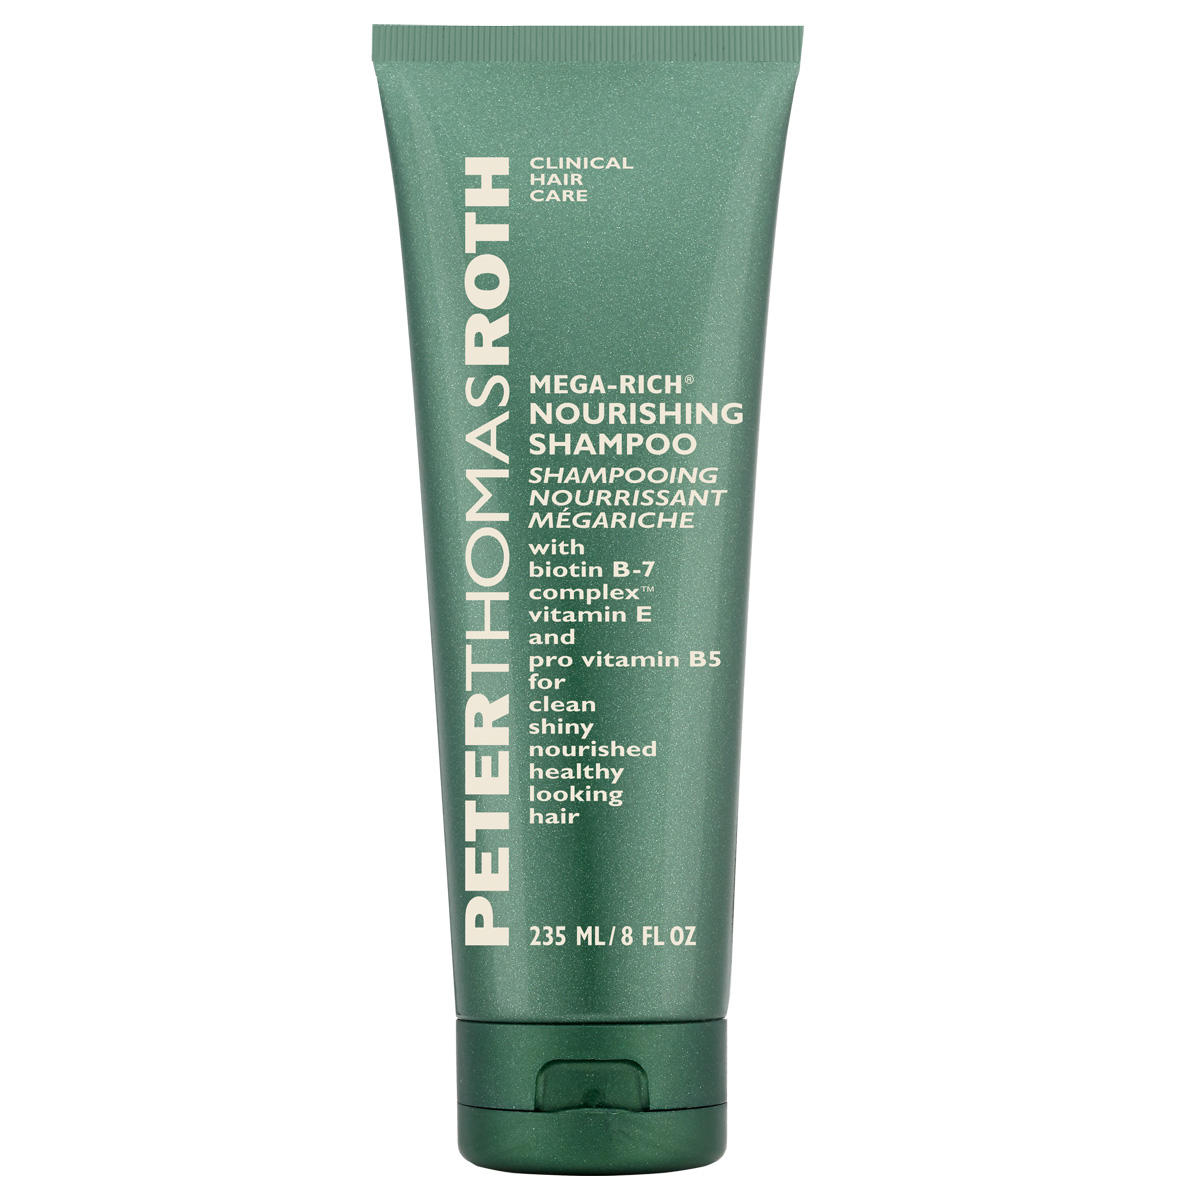 PETER THOMAS ROTH CLINICAL HAIR CARE Mega-Rich Nourishing Shampoo 235 ml